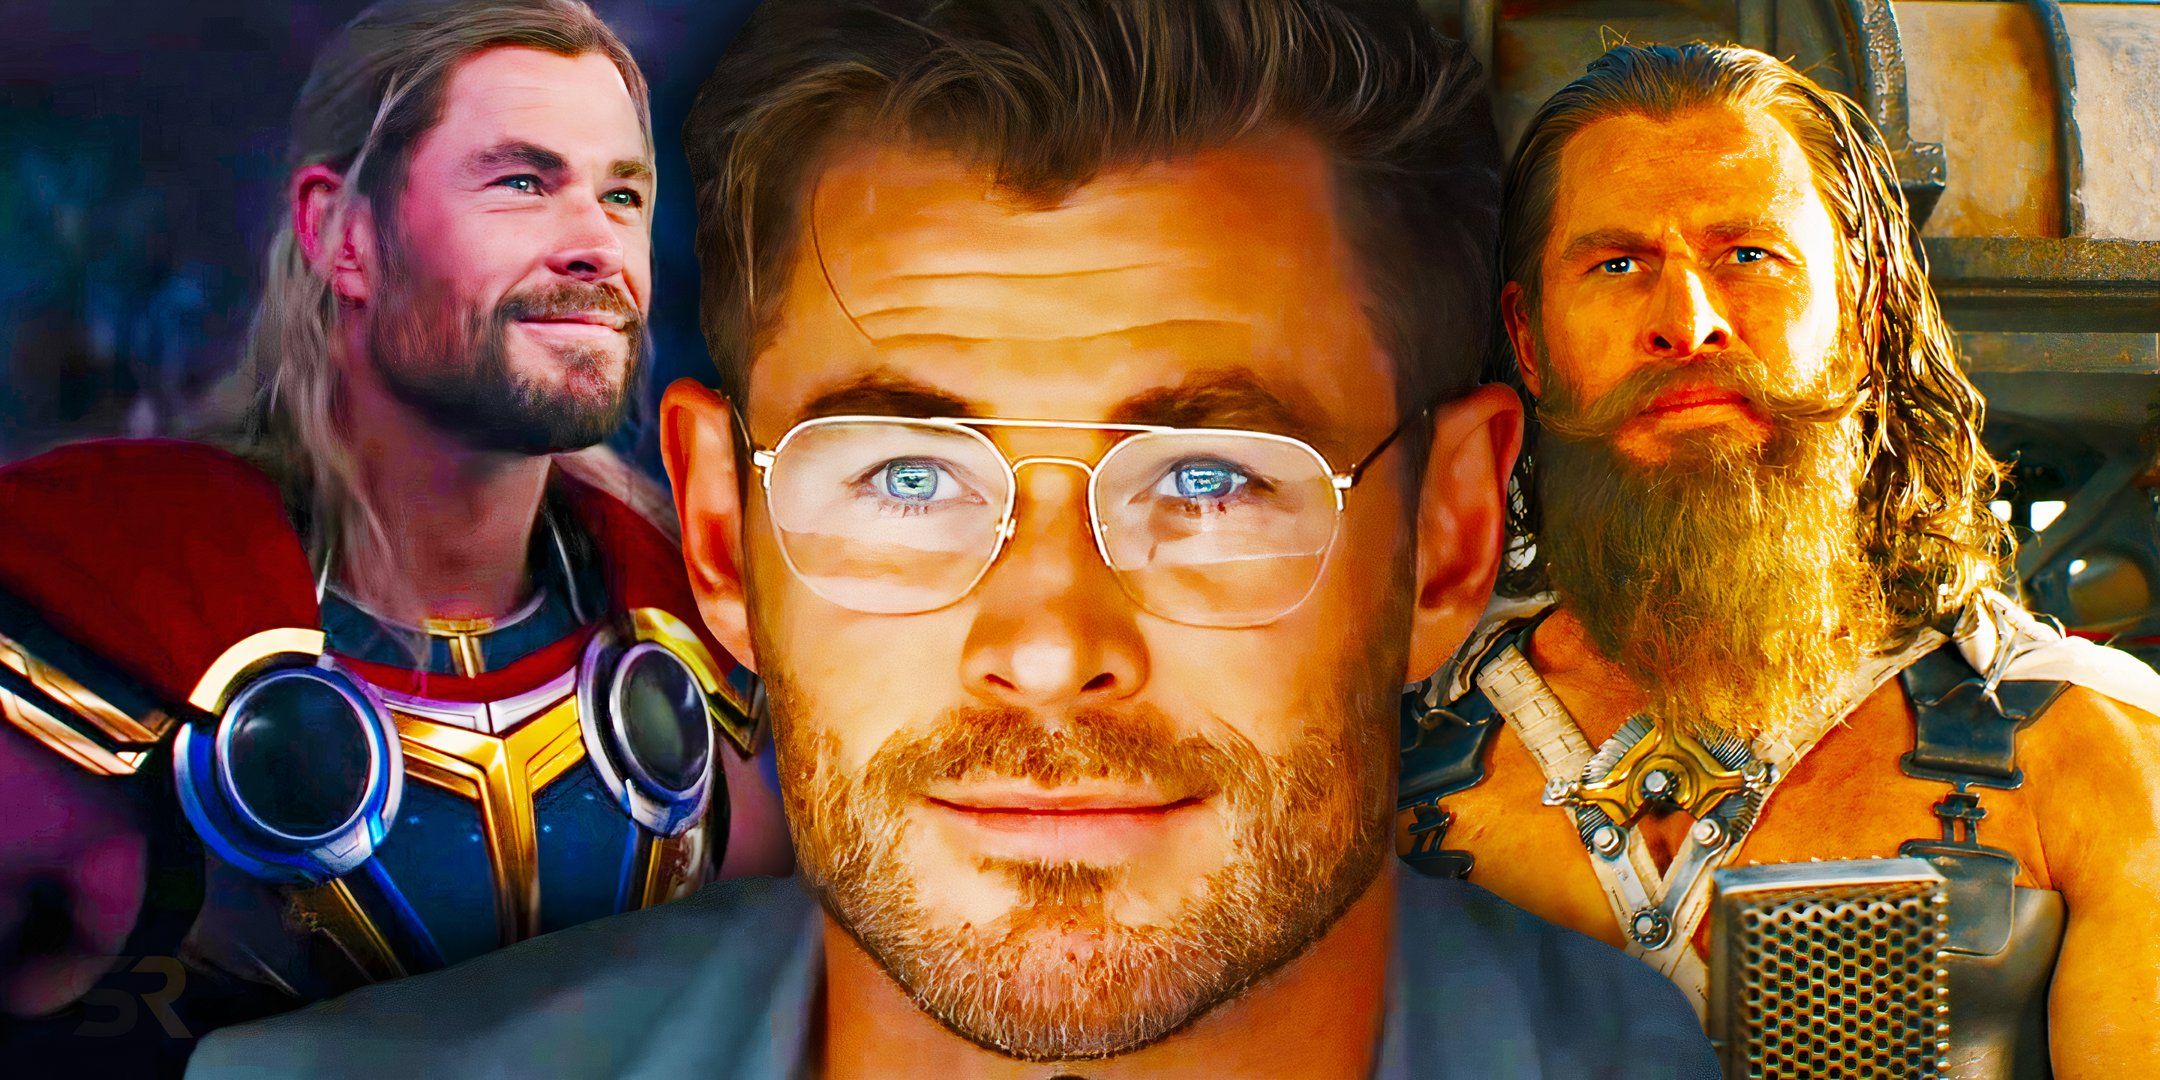 Chris Hemsworth as Thor in the MCU, Steve Abnesti in Spiderhead, and Dr. Dementus in Furiosa